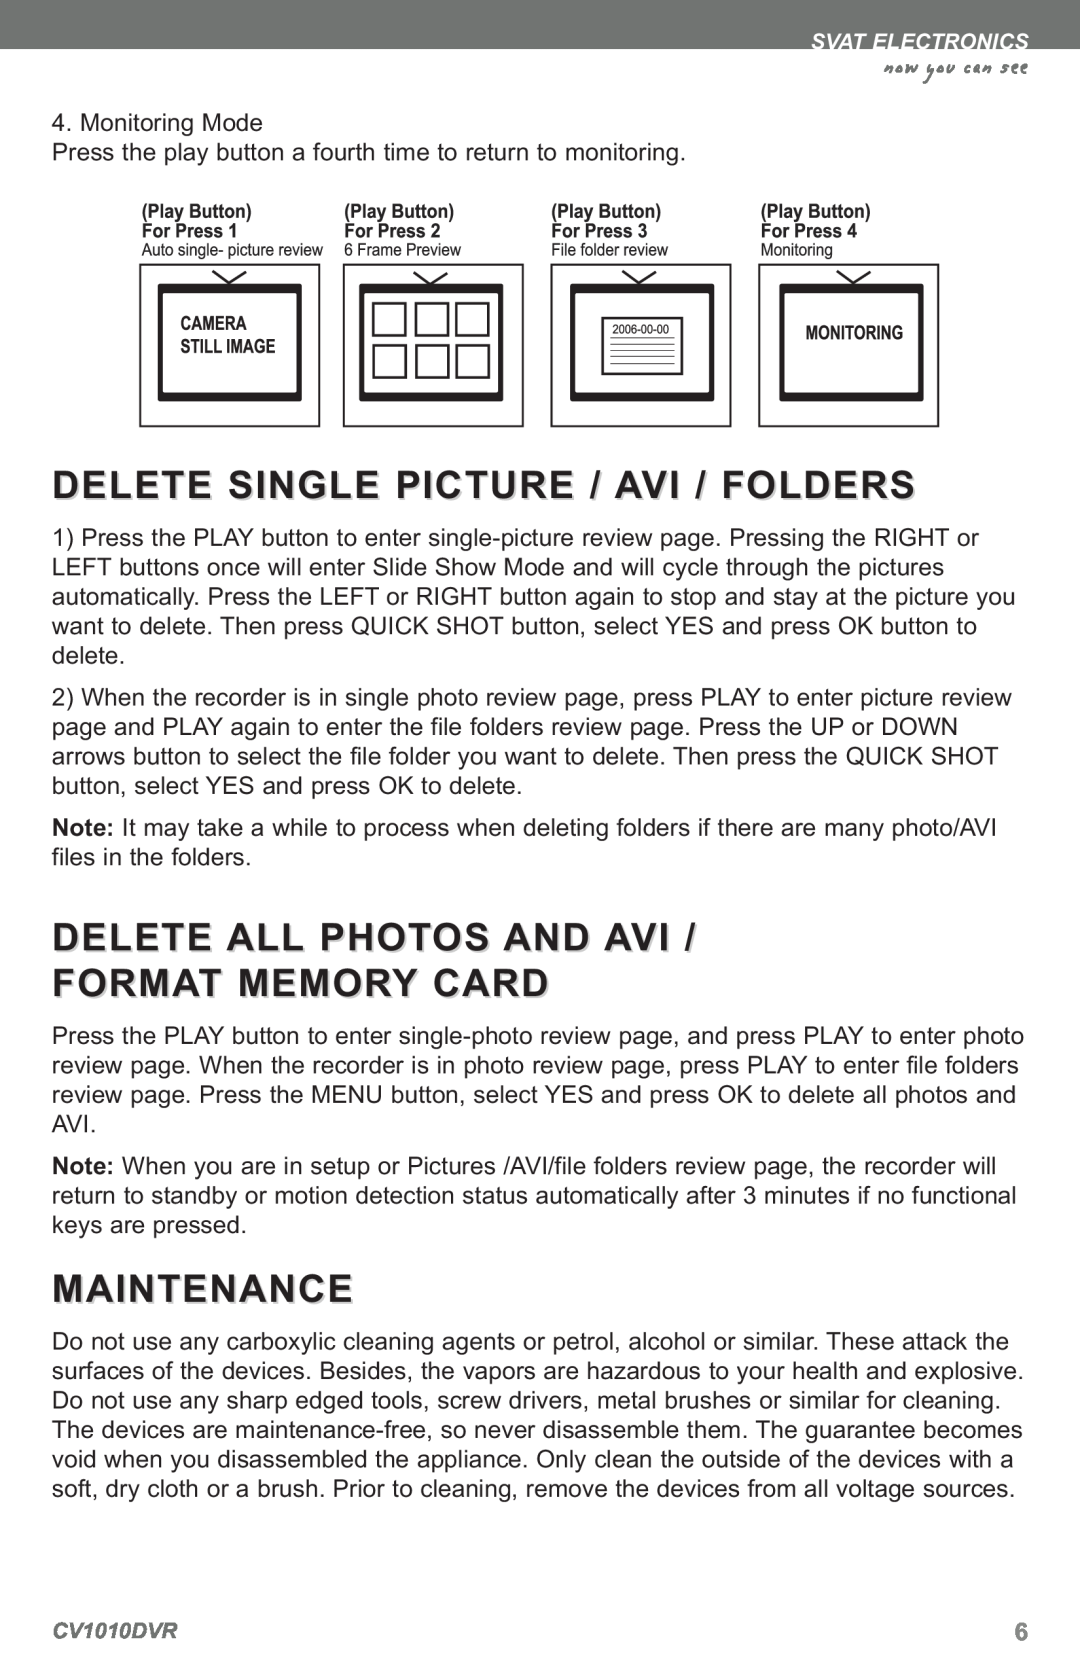 SVAT Electronics CV1010 Delete Single Picture / Avi / Folders, Delete All Photos And Avi Format Memory Card, Maintenance 